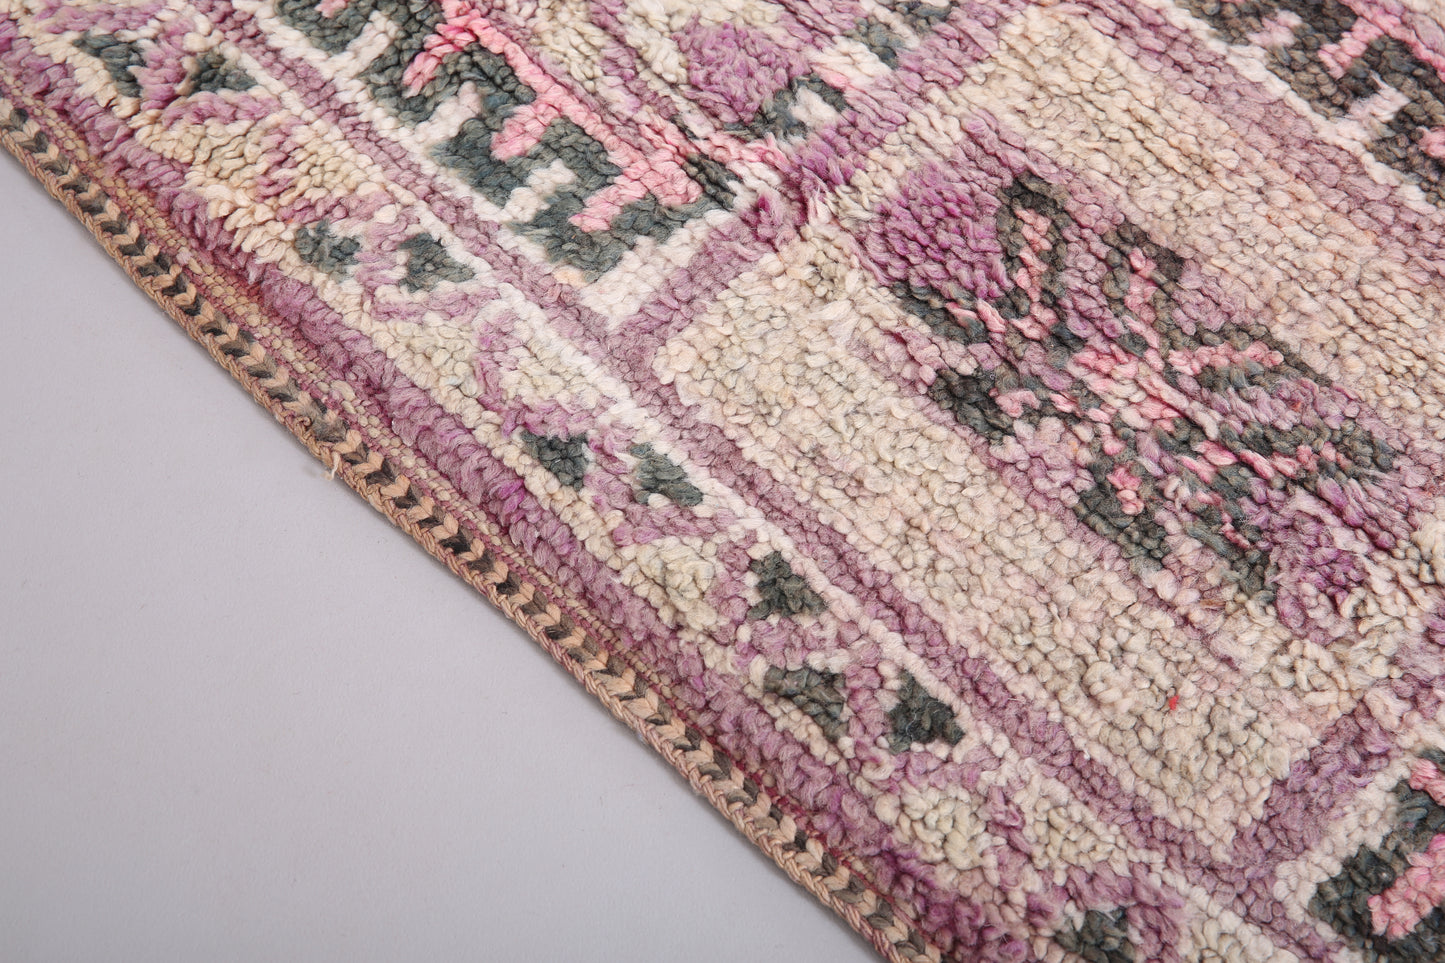 Purple vintage moroccan rug 5.8 FT X 10.7 FT